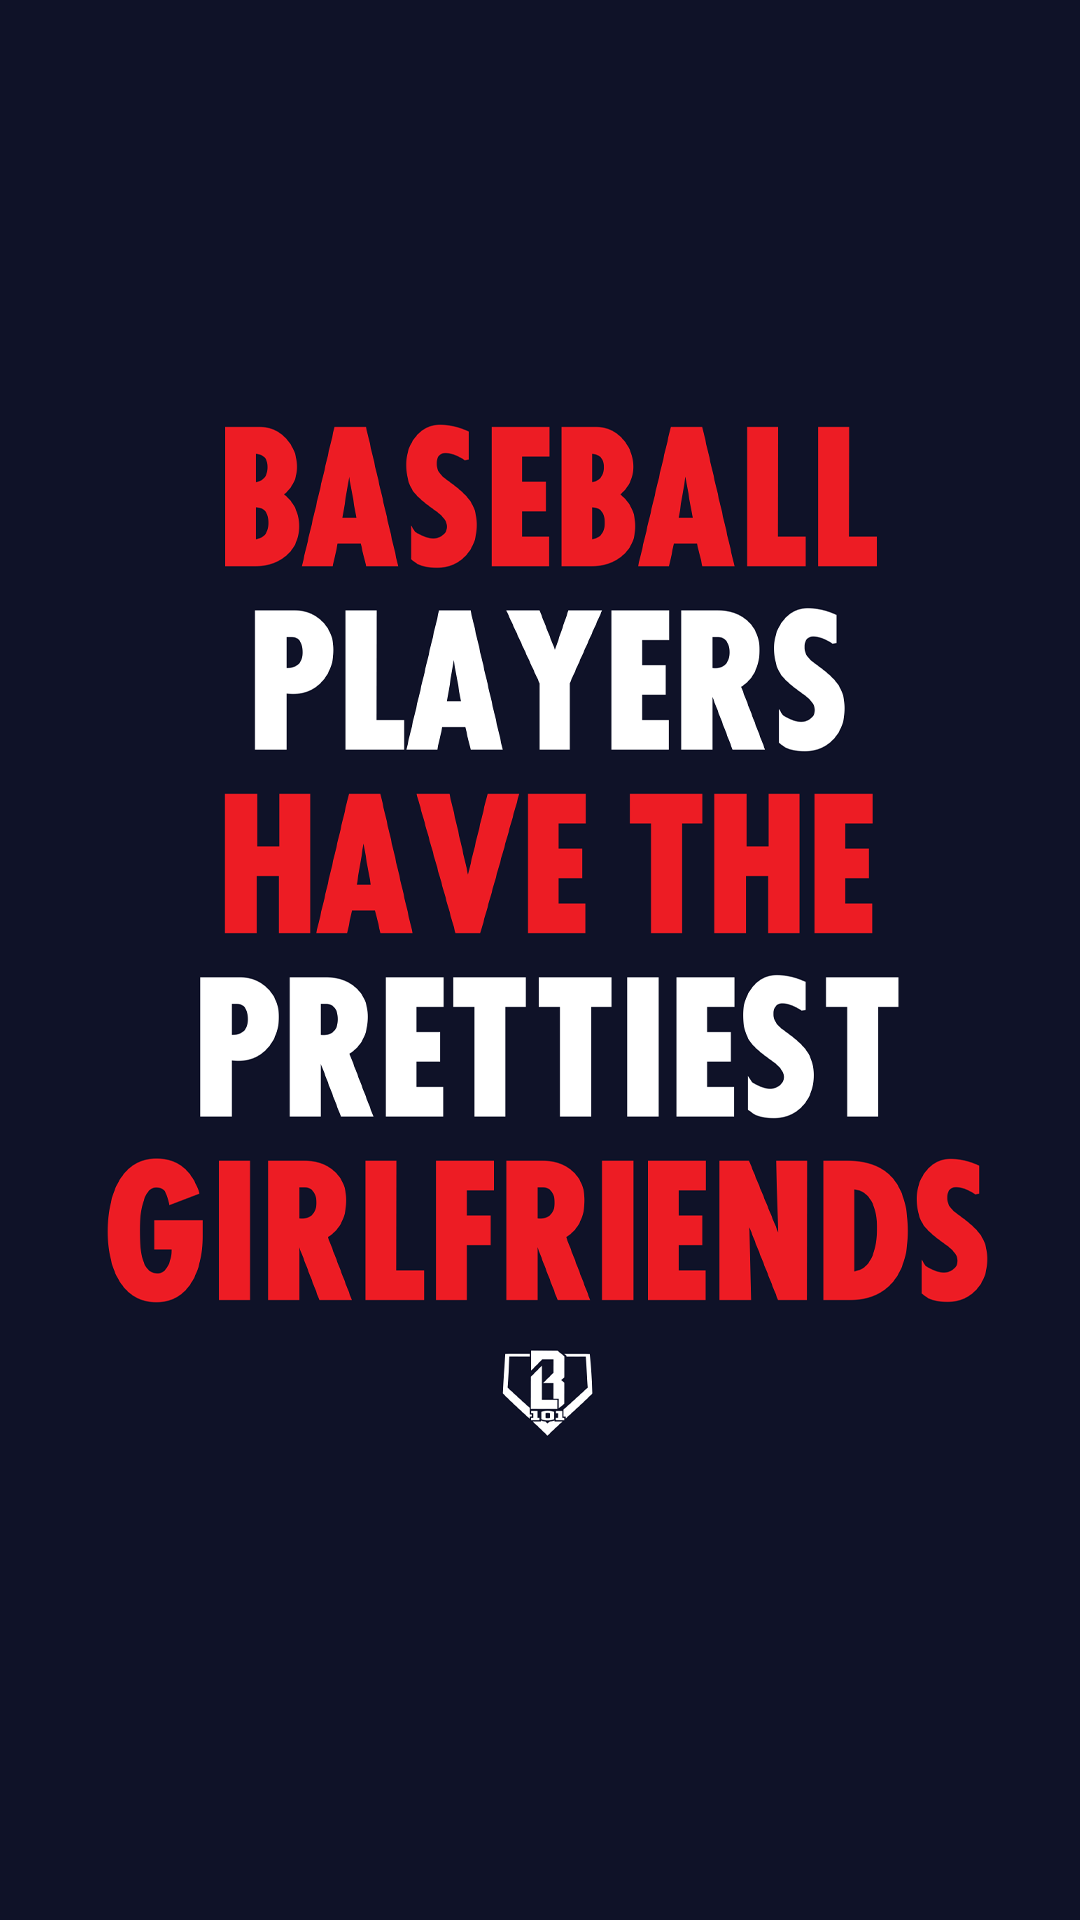 Wallpaper Wednesday - Baseball Players Have the Prettiest Girlfriends